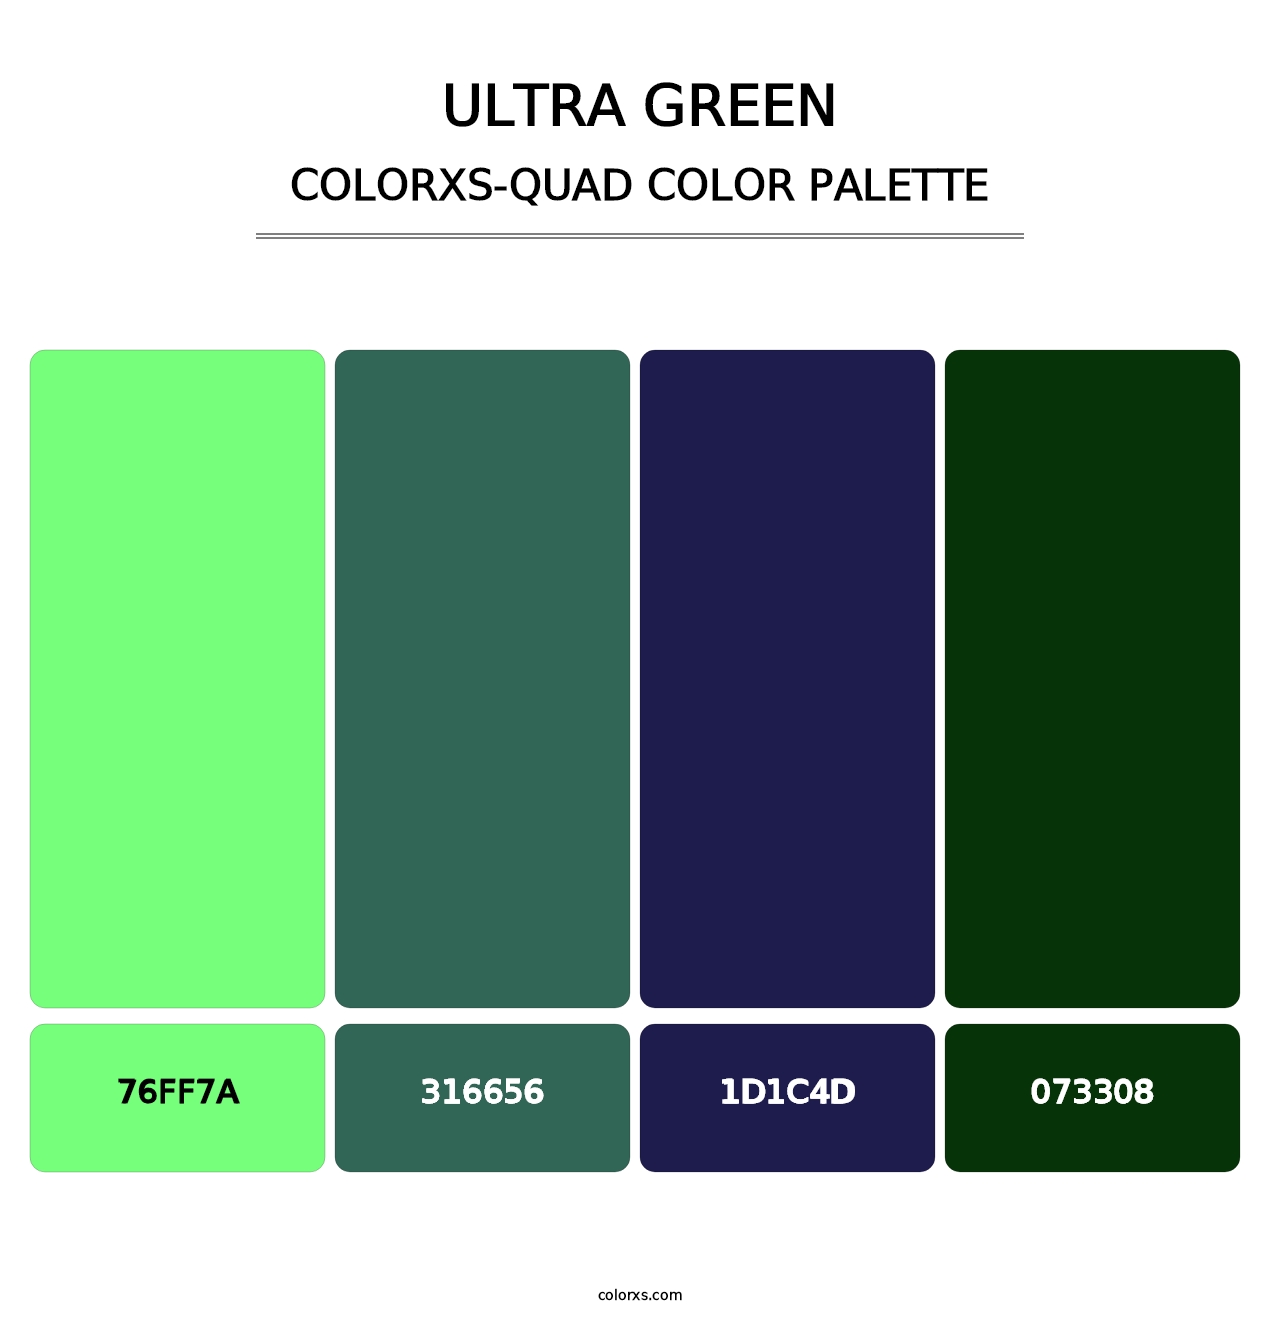 Ultra Green - Colorxs Quad Palette